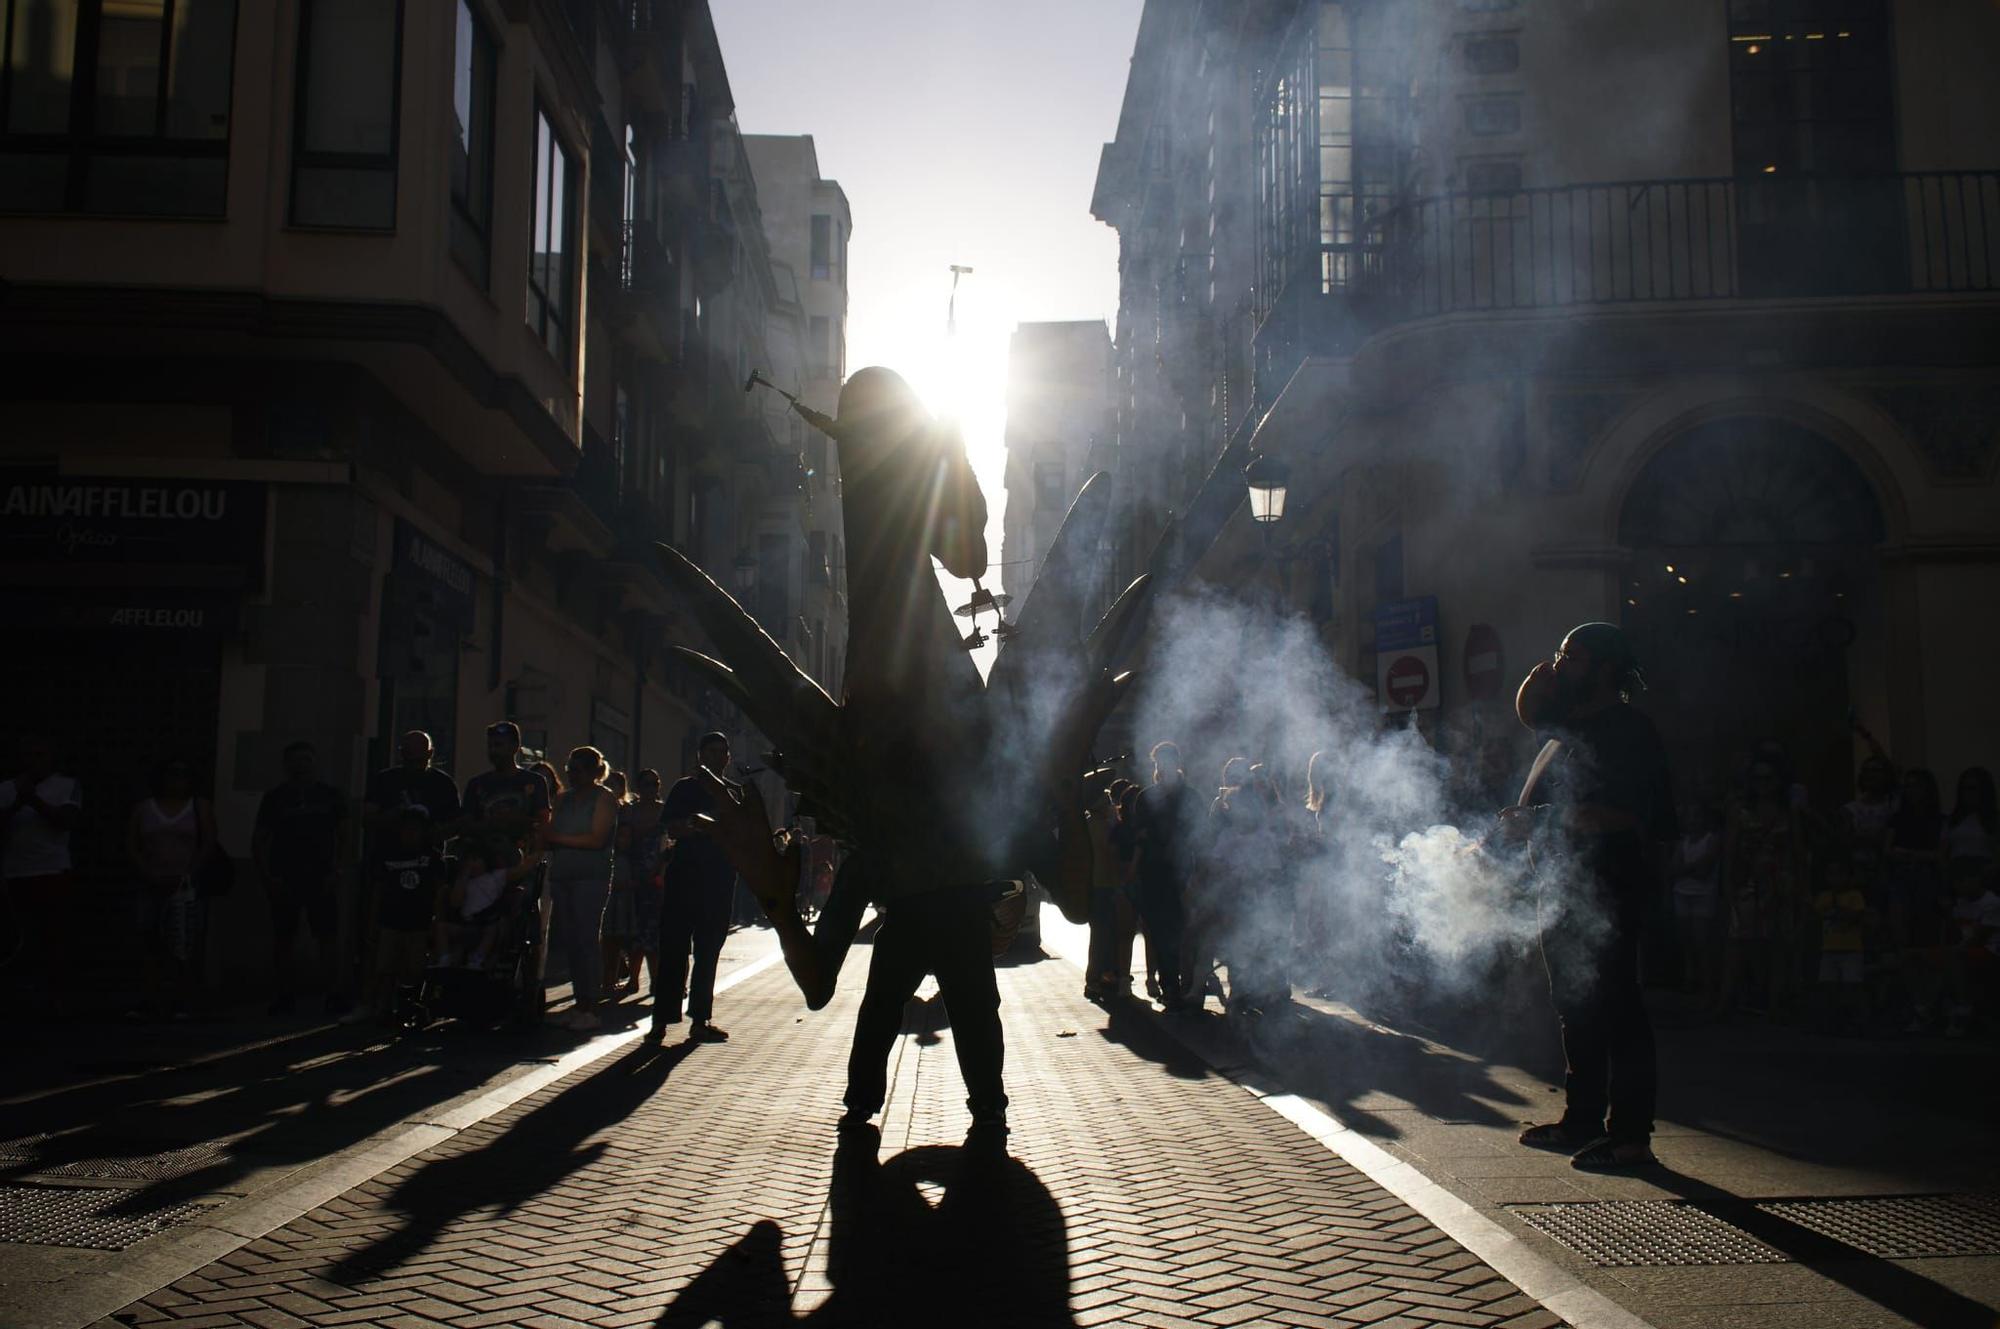 Castelló celebra la XXII Trobada de Bèsties de Foc